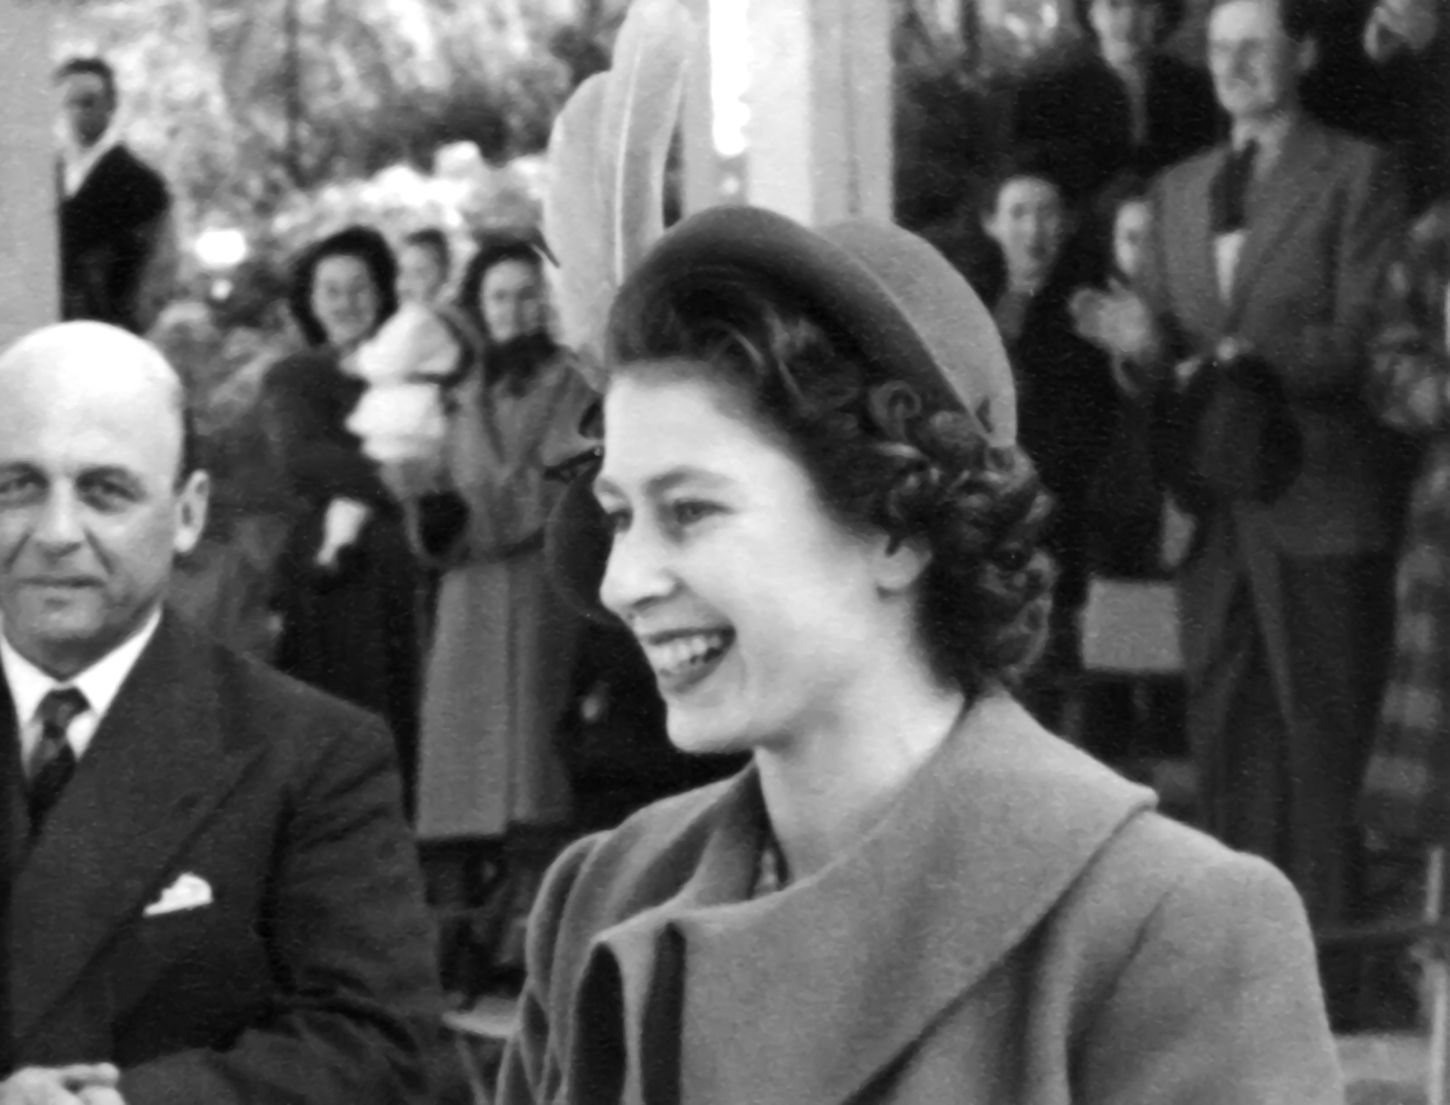 Queen Elizabeth II when she lived in Malta between 1947 and 1951